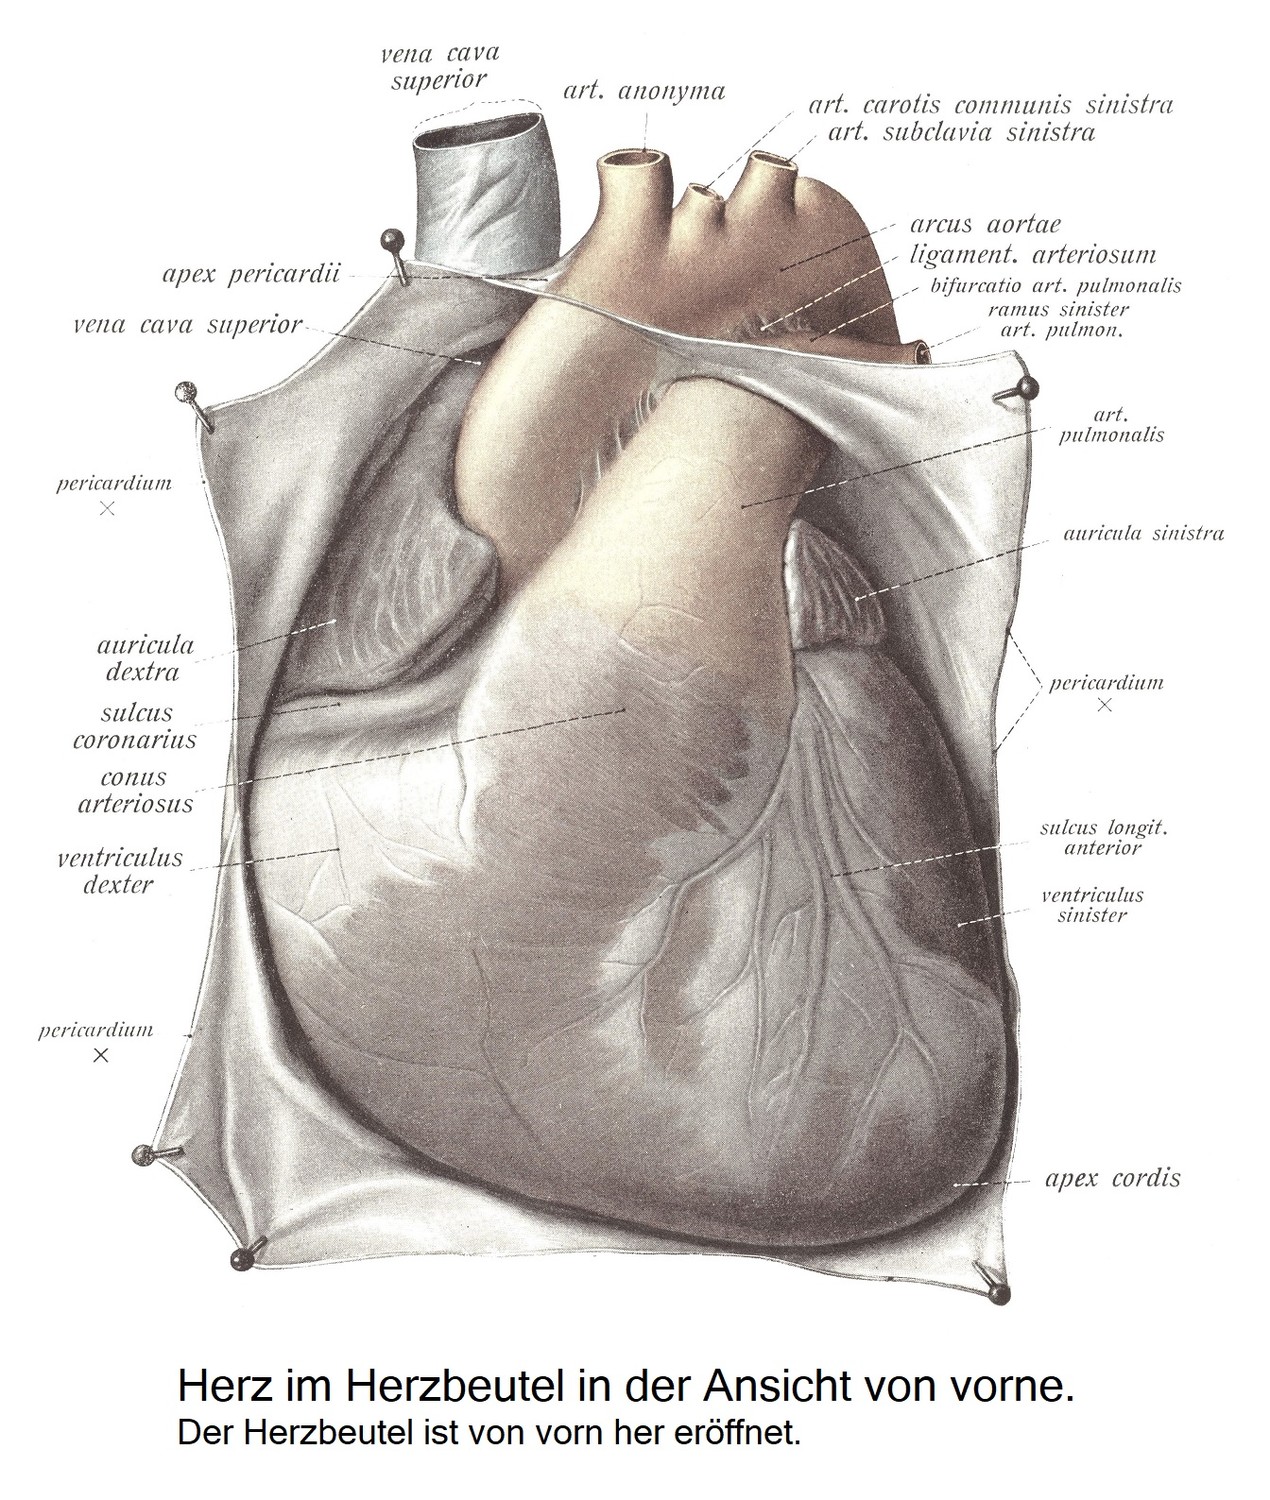 Herzbeutel, pericardium